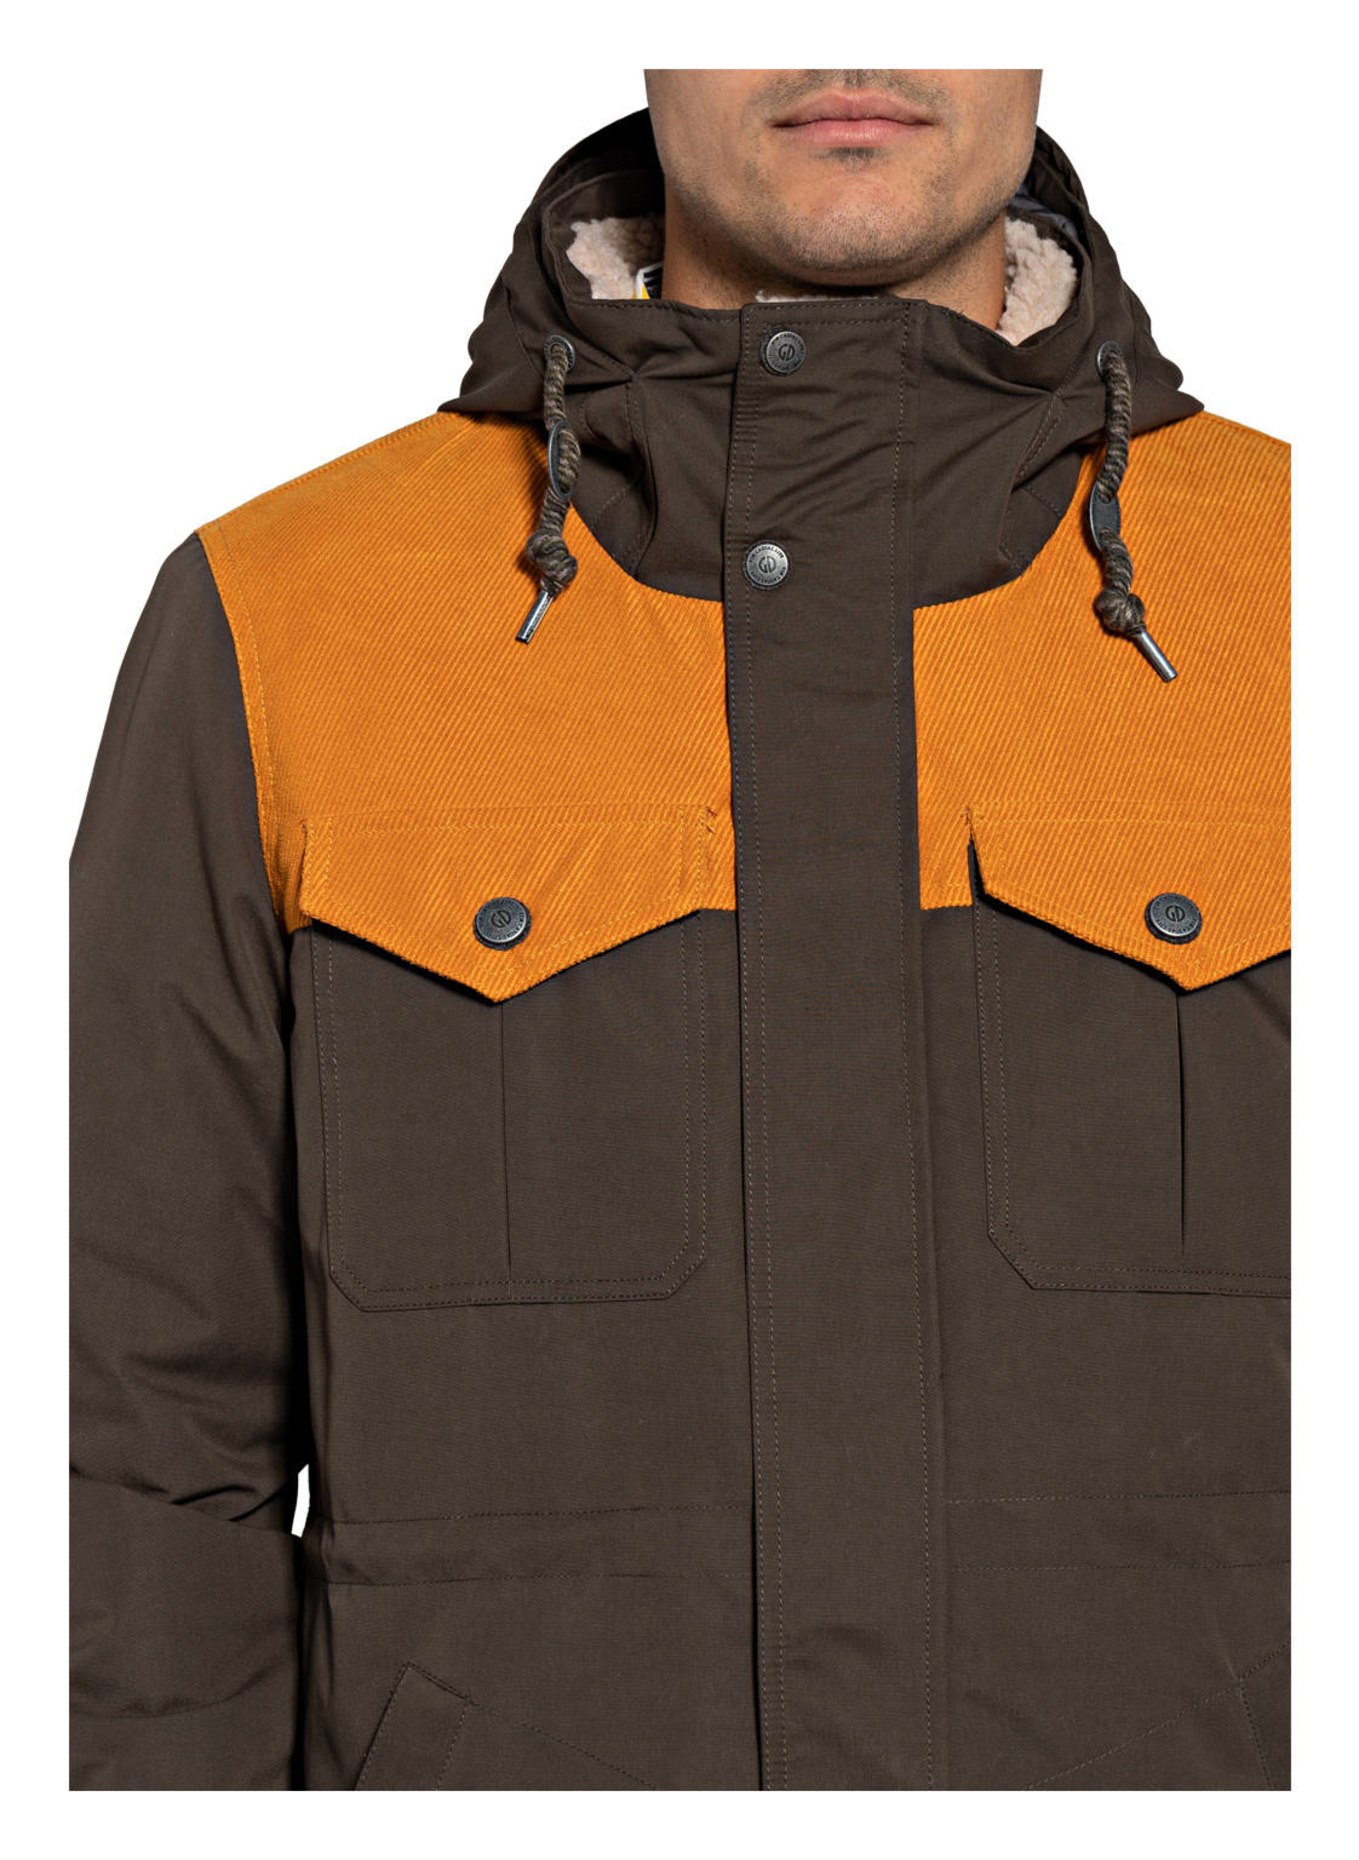 G.I.G.A. DX by killtec Outdoor jacket STORMIGA in brown/ dark orange